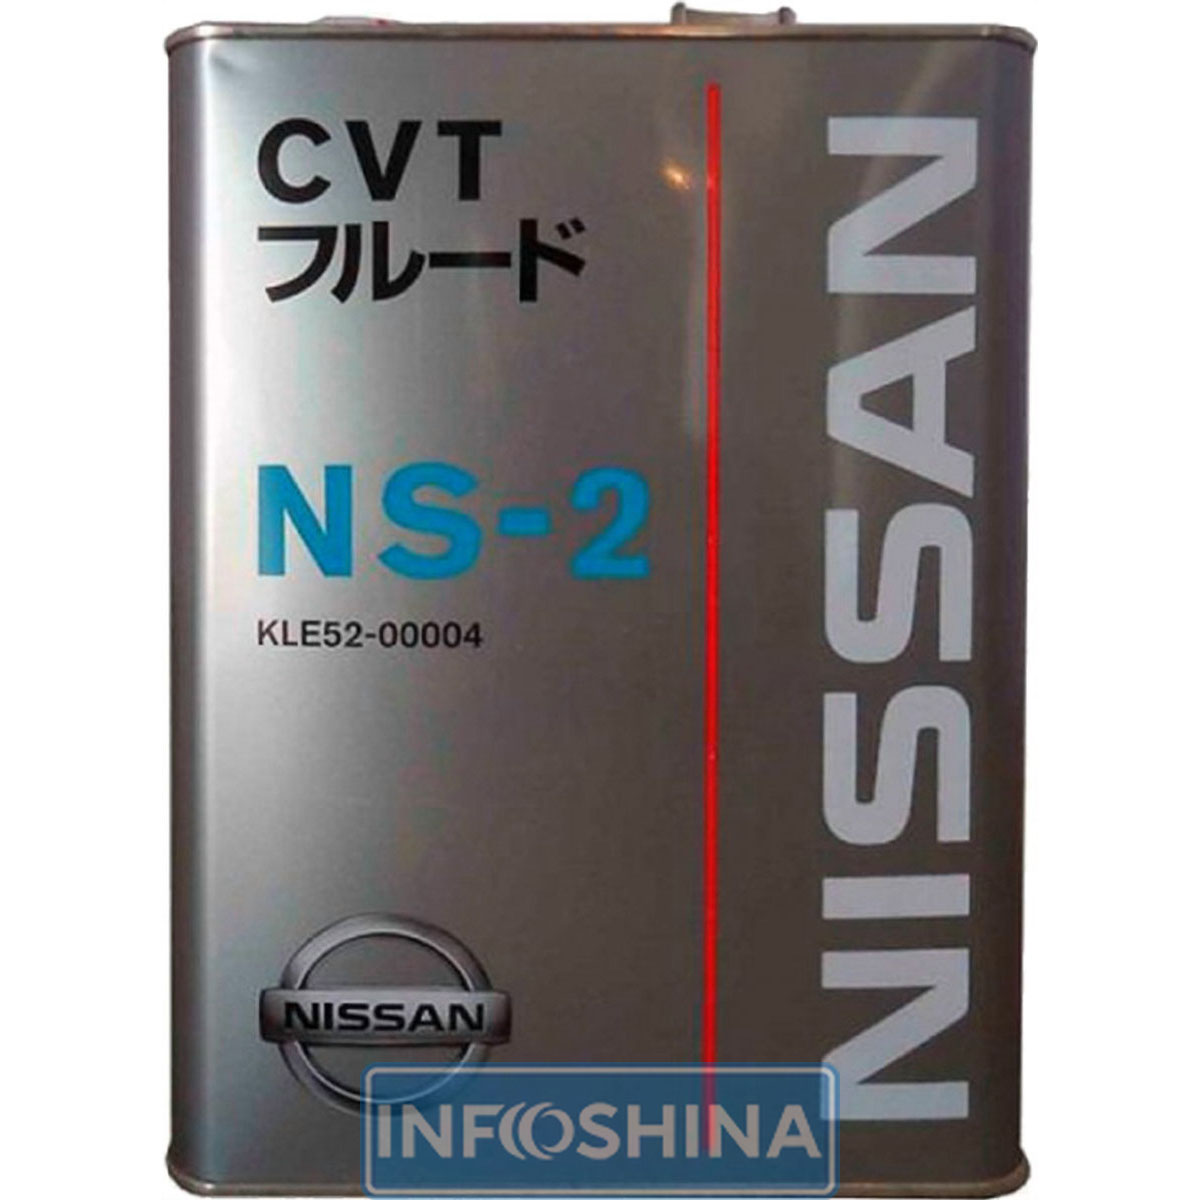 Купити масло Nissan CVT NS-2